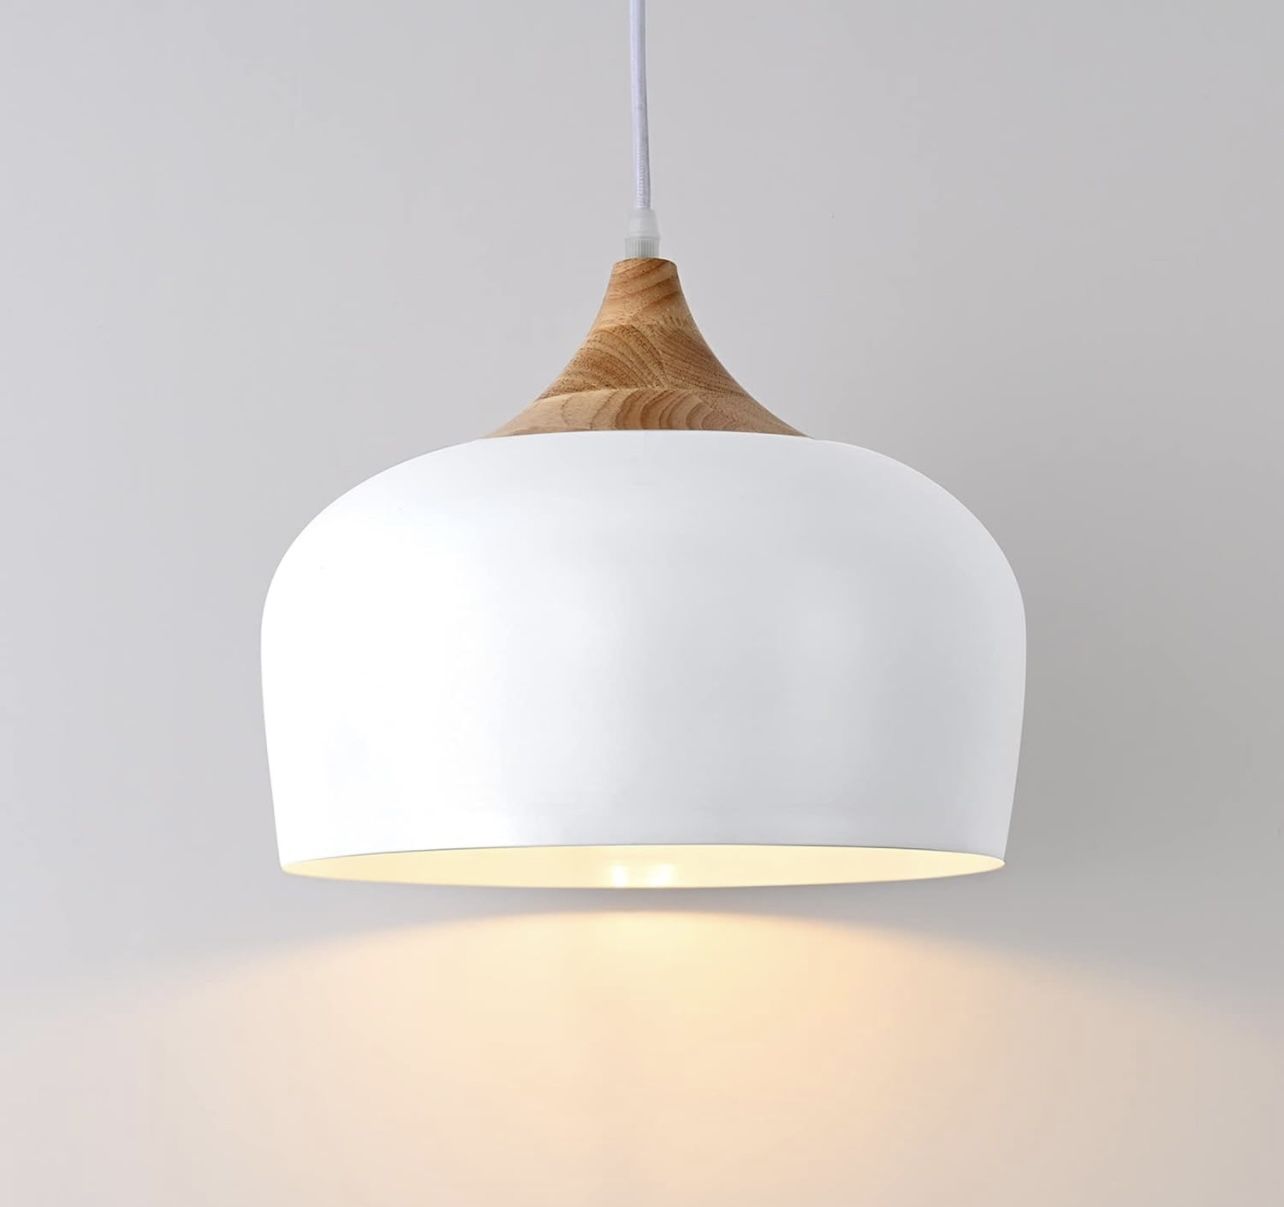 Modern Solid Wood Pendant Light Large Ceiling Hanging Lamp Adjustable Fixture Kitchen Dining Chandelier